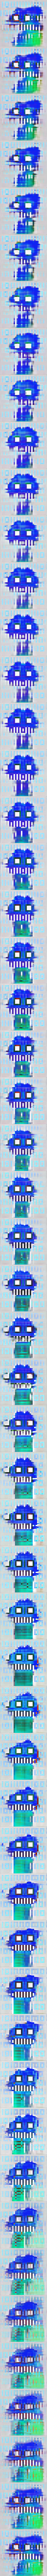 Cyber ghostGAN (91/144)